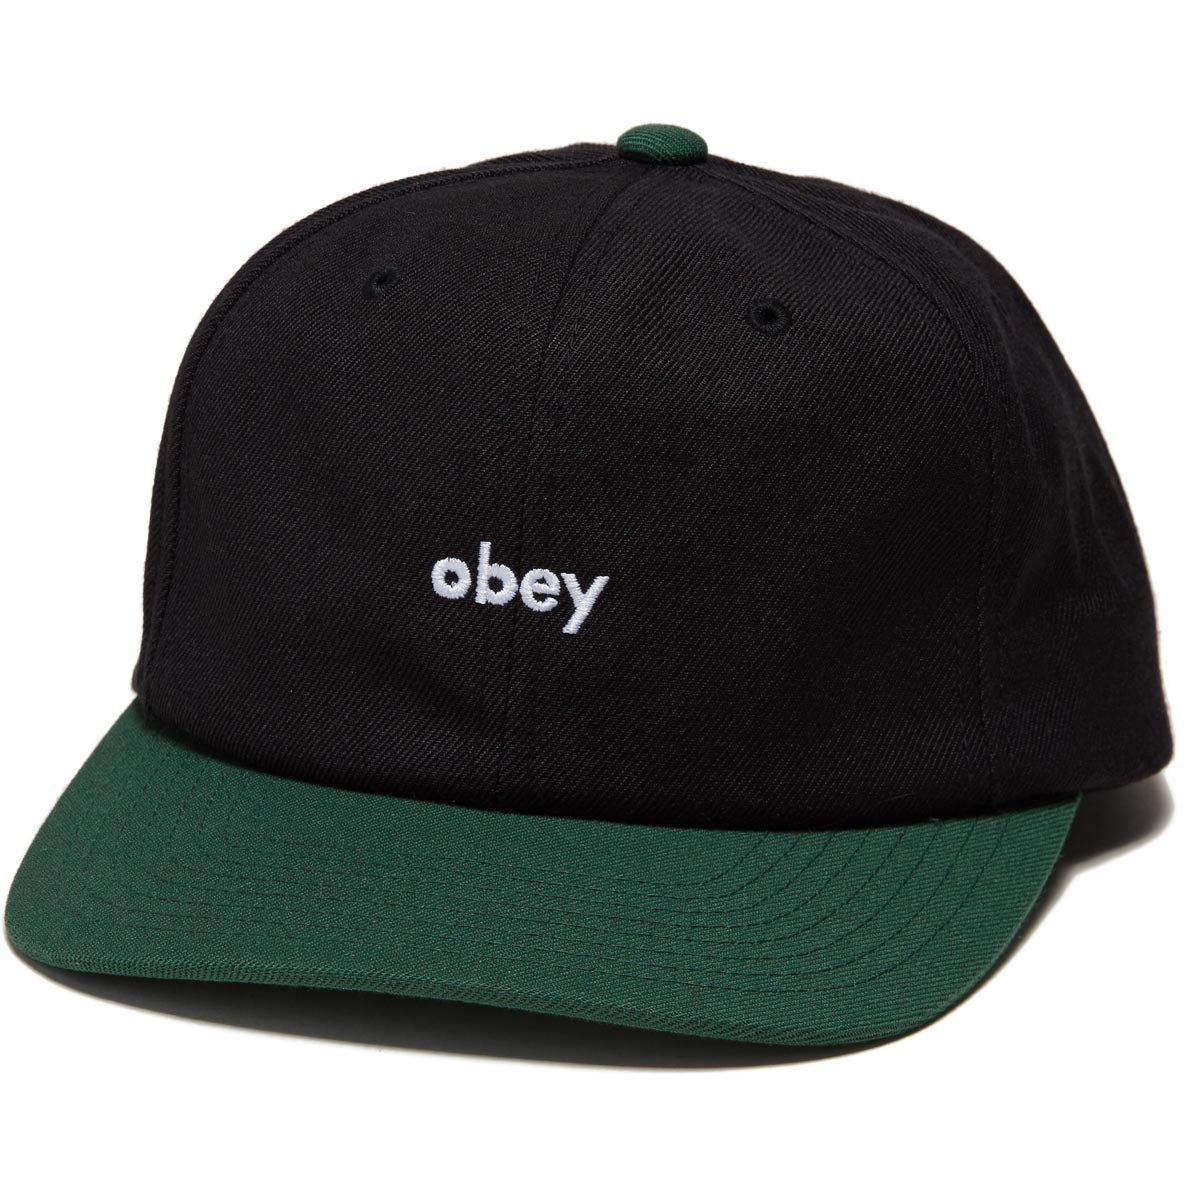 Obey 2 Tone Lowercase 6 Panel Hat - Black Multi image 1